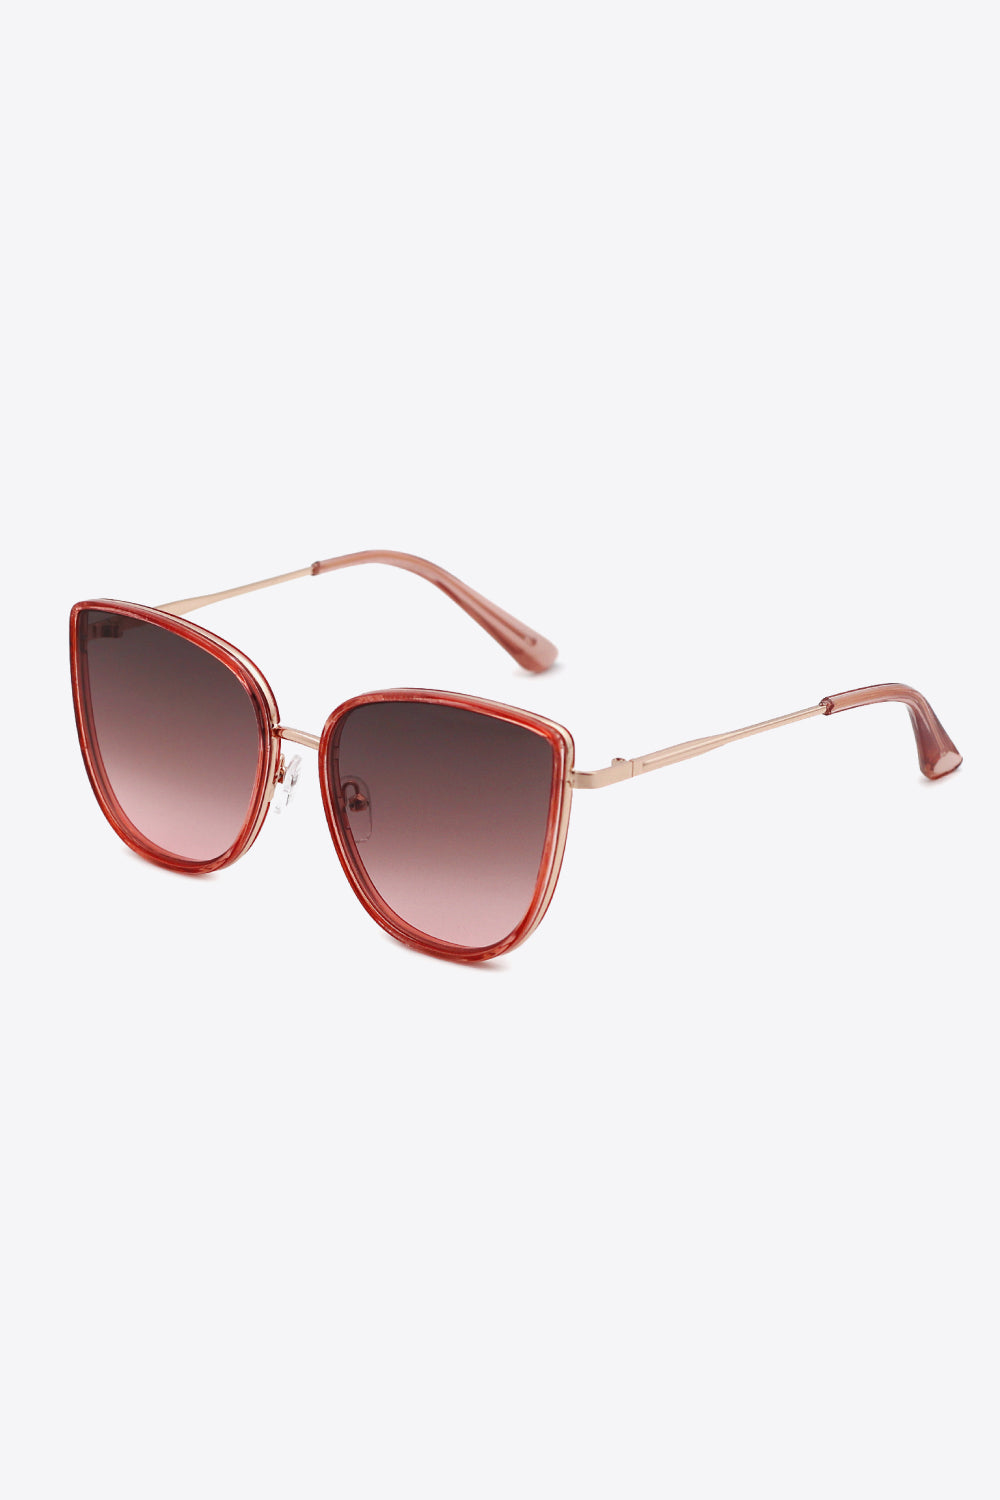 WINE ONE SIZE - Full Rim Metal-Plastic Hybrid Frame Sunglasses - 2 colors - Sunglasses at TFC&H Co.